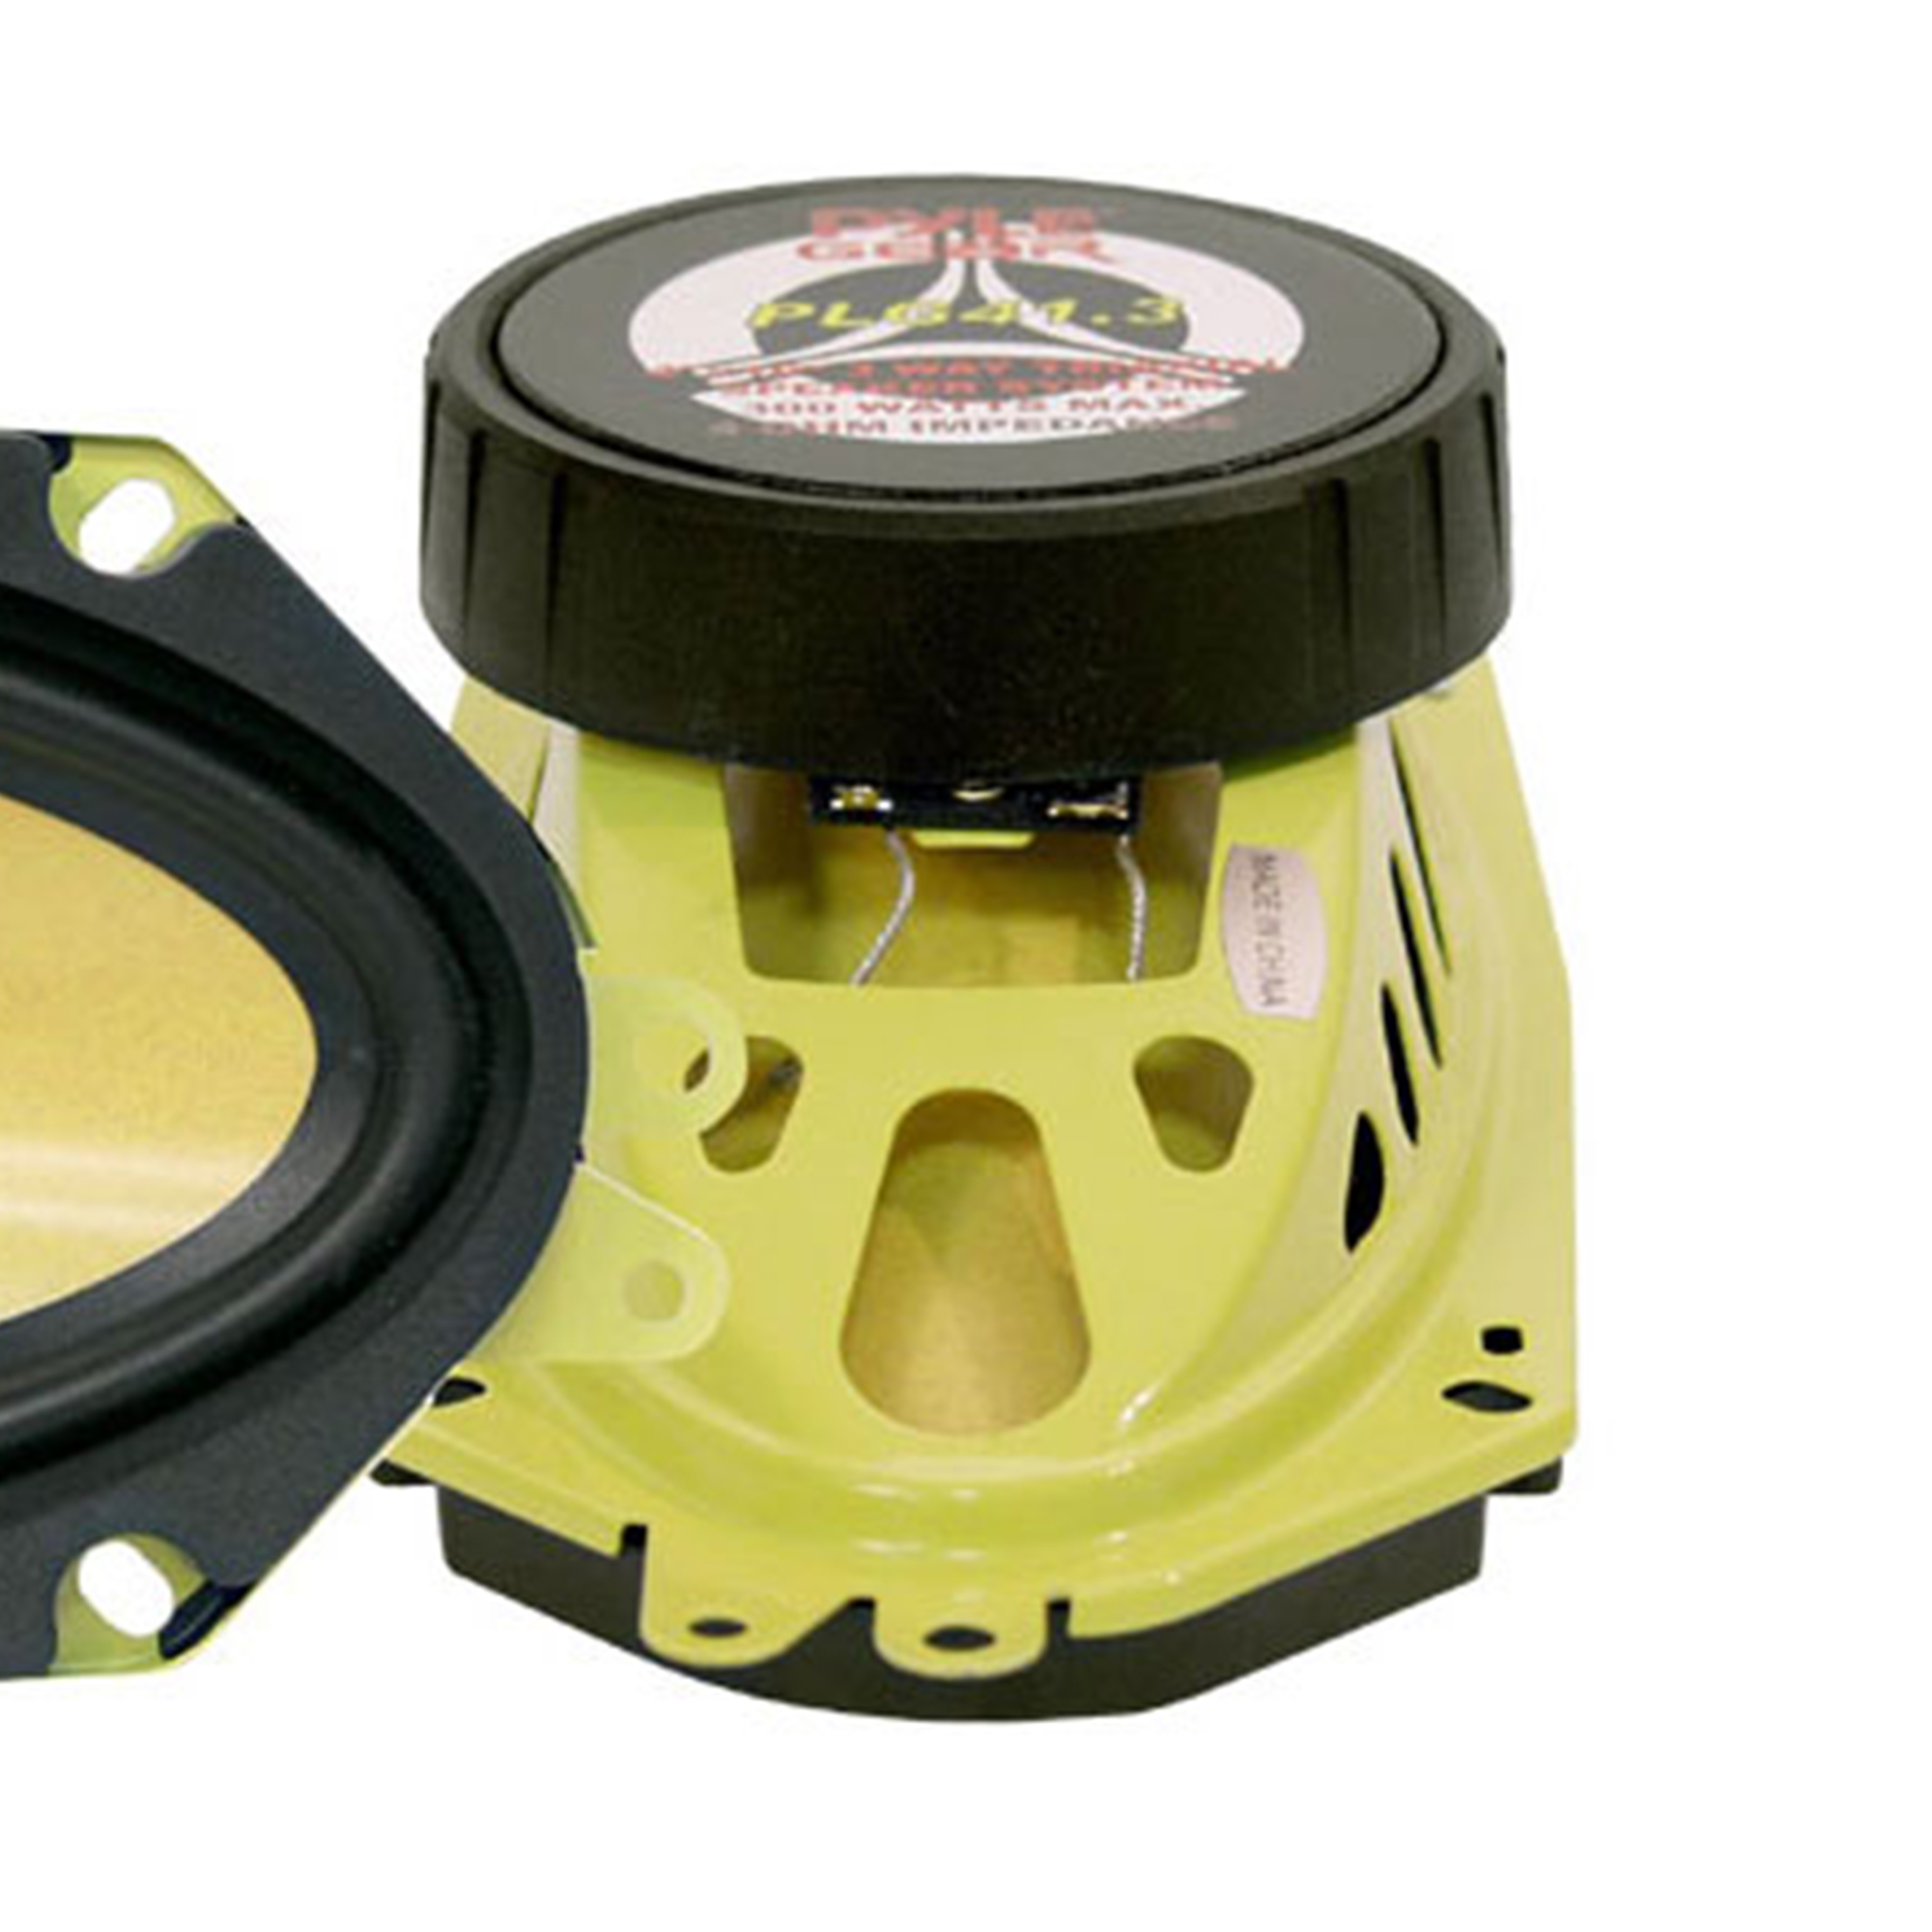 PYLE PLG413 - 4”x 10” Inch Three Way Sound Speaker System - Yellow Poly Cone Pro Loud Range Audio 300 Watt Peak Power Per Pair w/ 4 Ohm Impedance - image 3 of 3